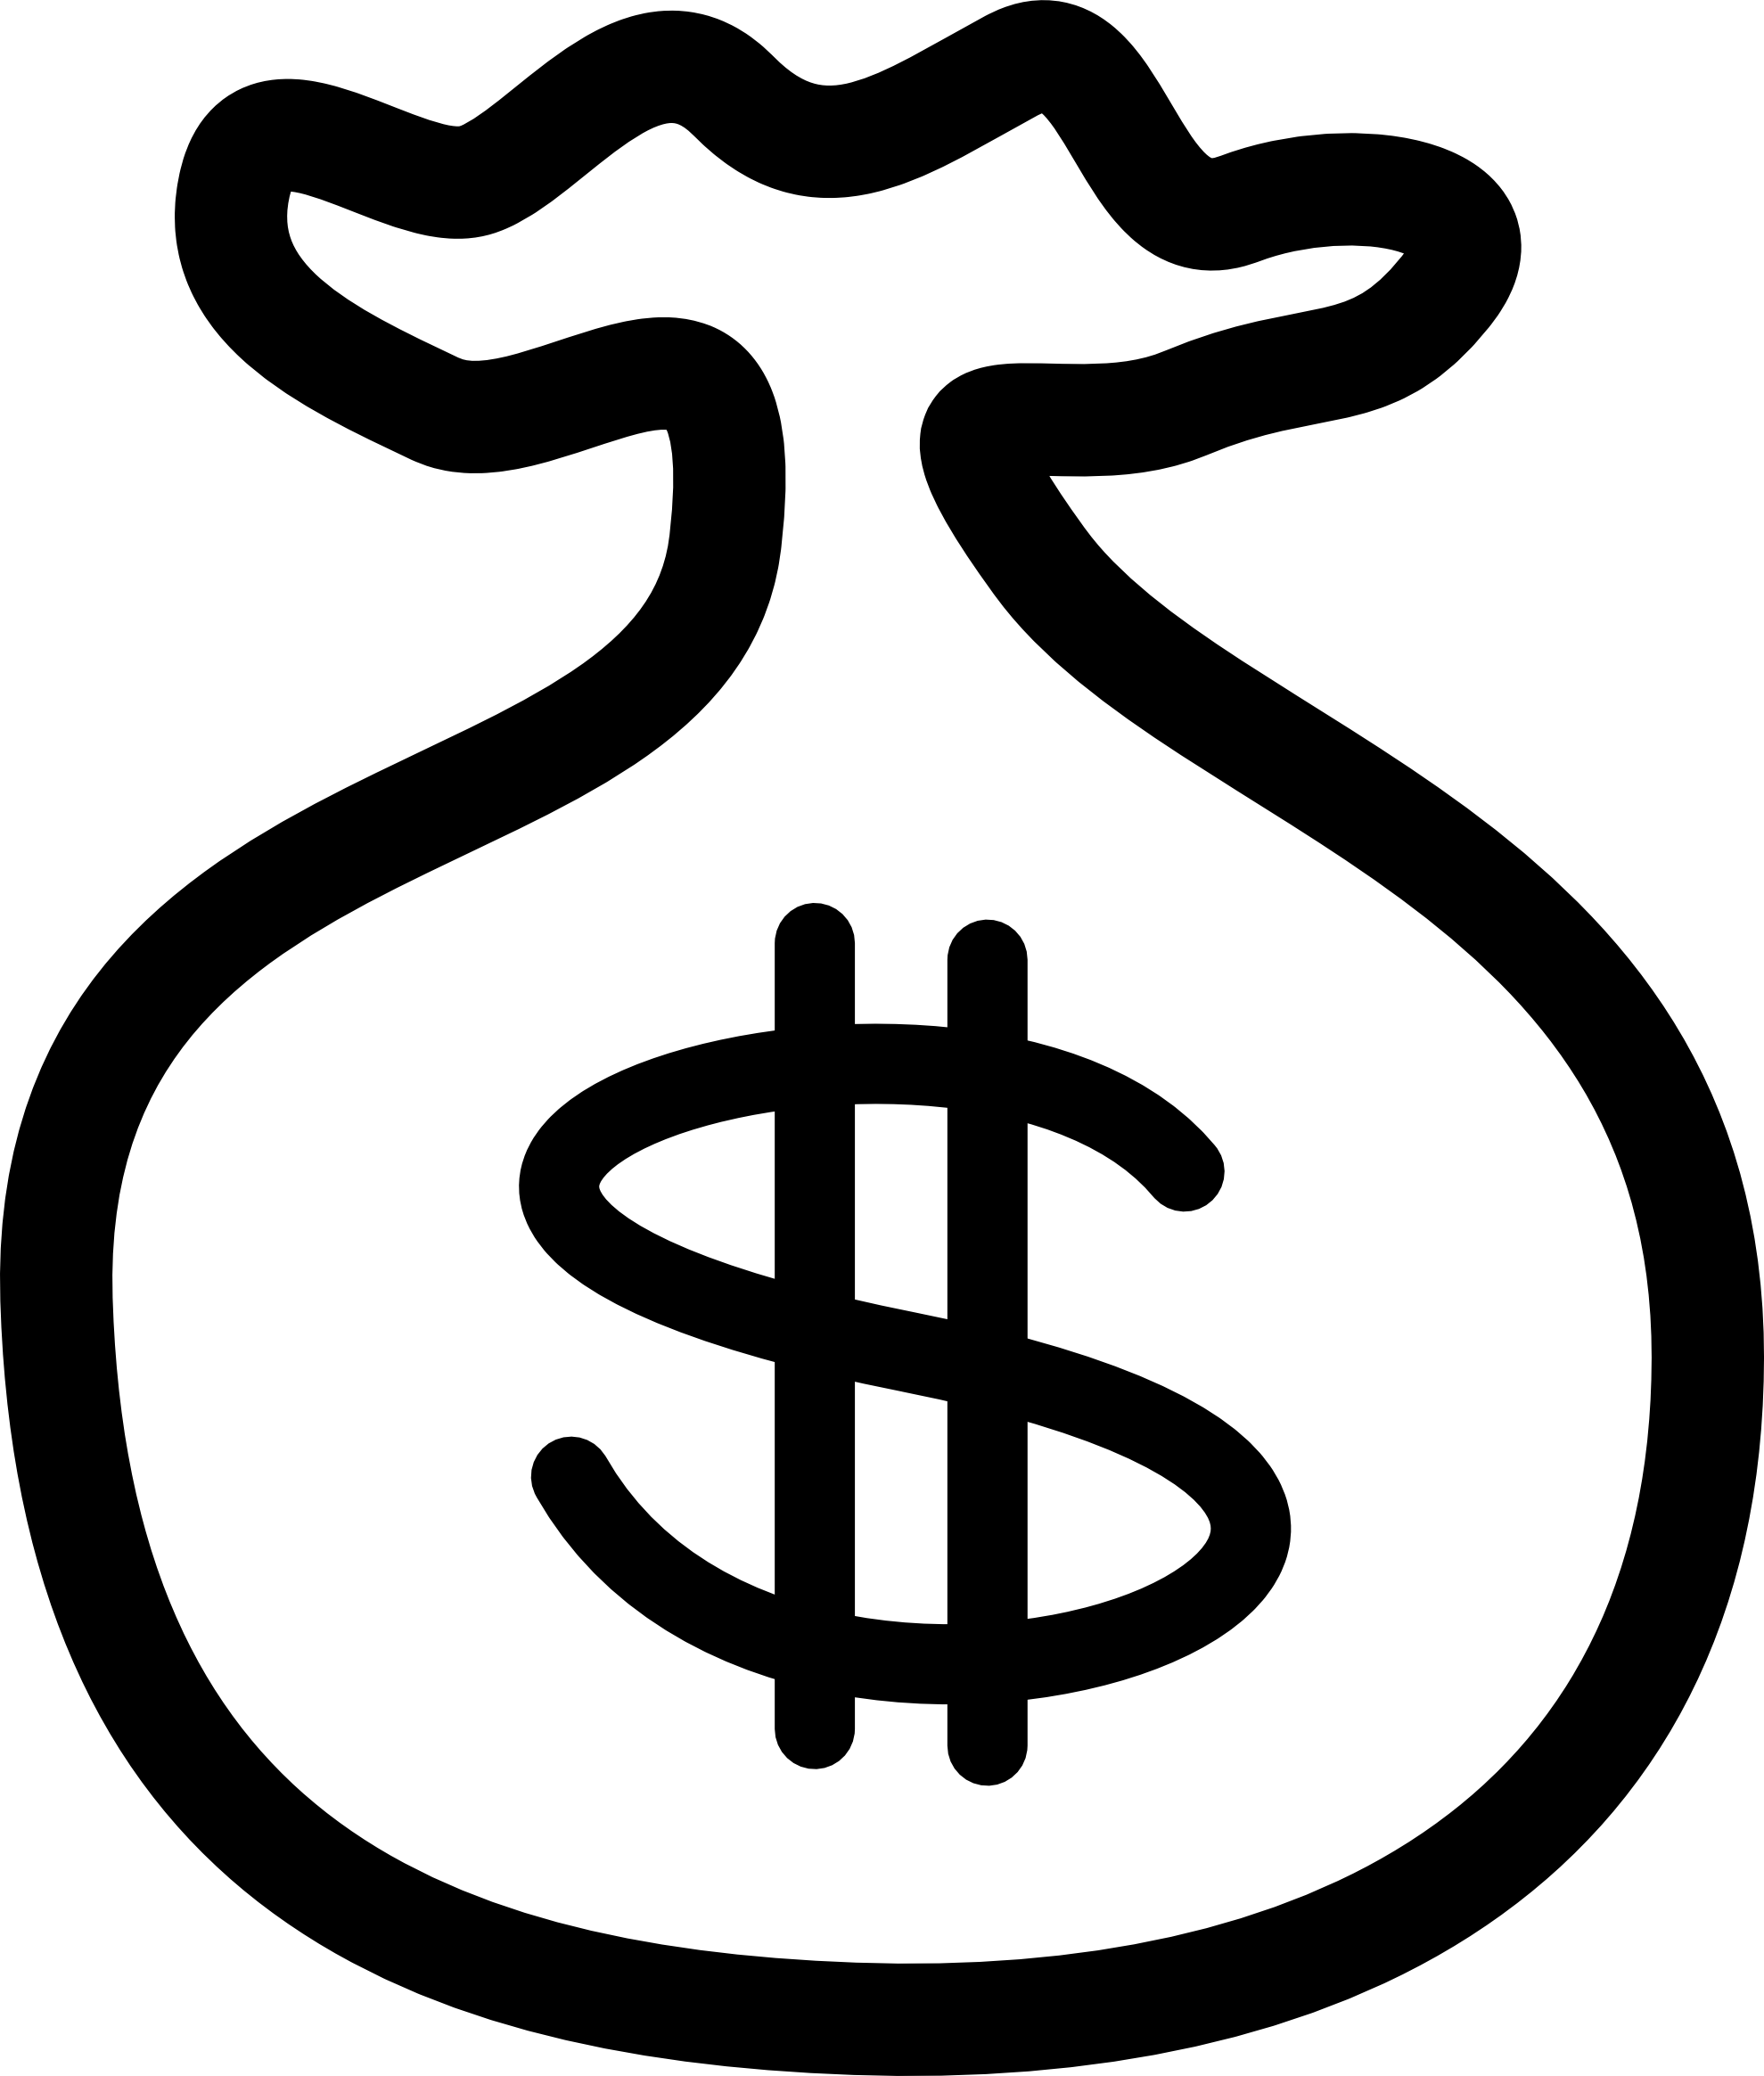 Money Bag Clip Art Black And White | Clipart Panda - Free ... - Money Bag Black and White